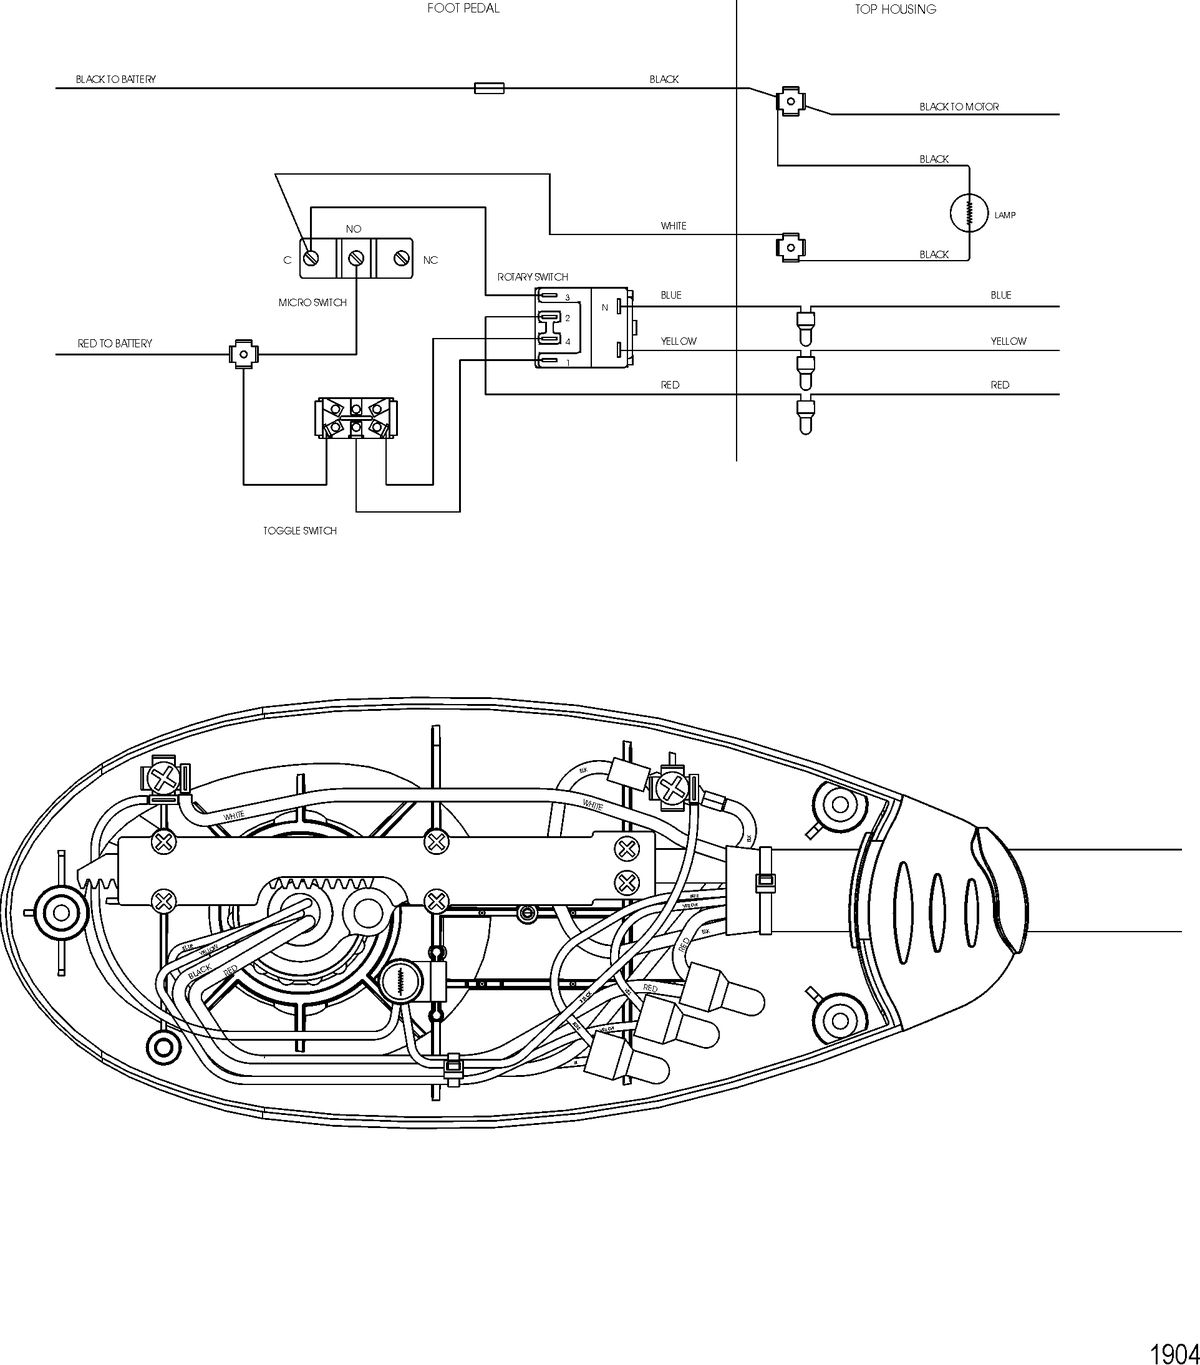 TROLLING MOTOR MOTORGUIDE BILL DANCE SERIES Wire Diagram(Design I - Lighted Version  Model BD1236)